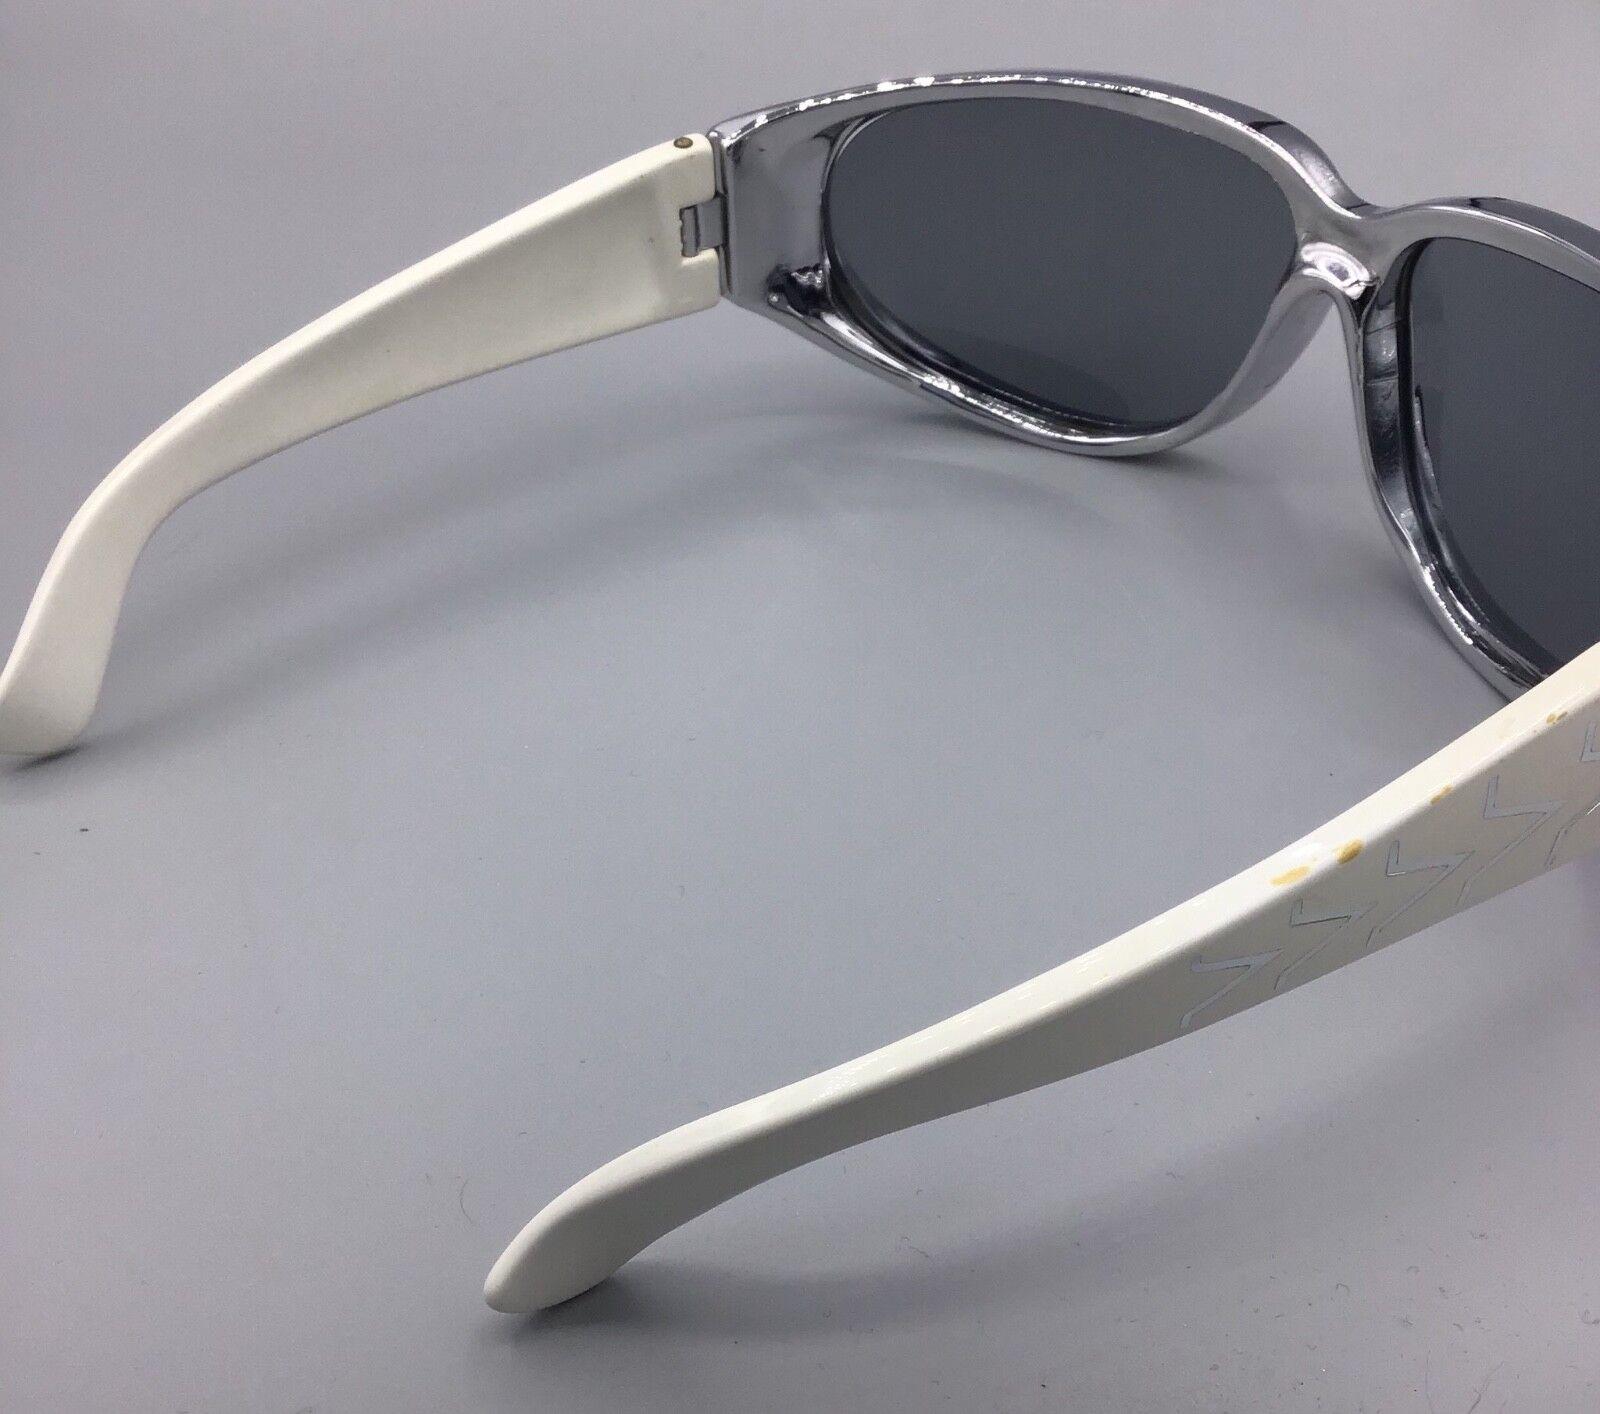 Occhiale vintage sunglasses da sole sonnenbrillen lunettes new old stock 60s